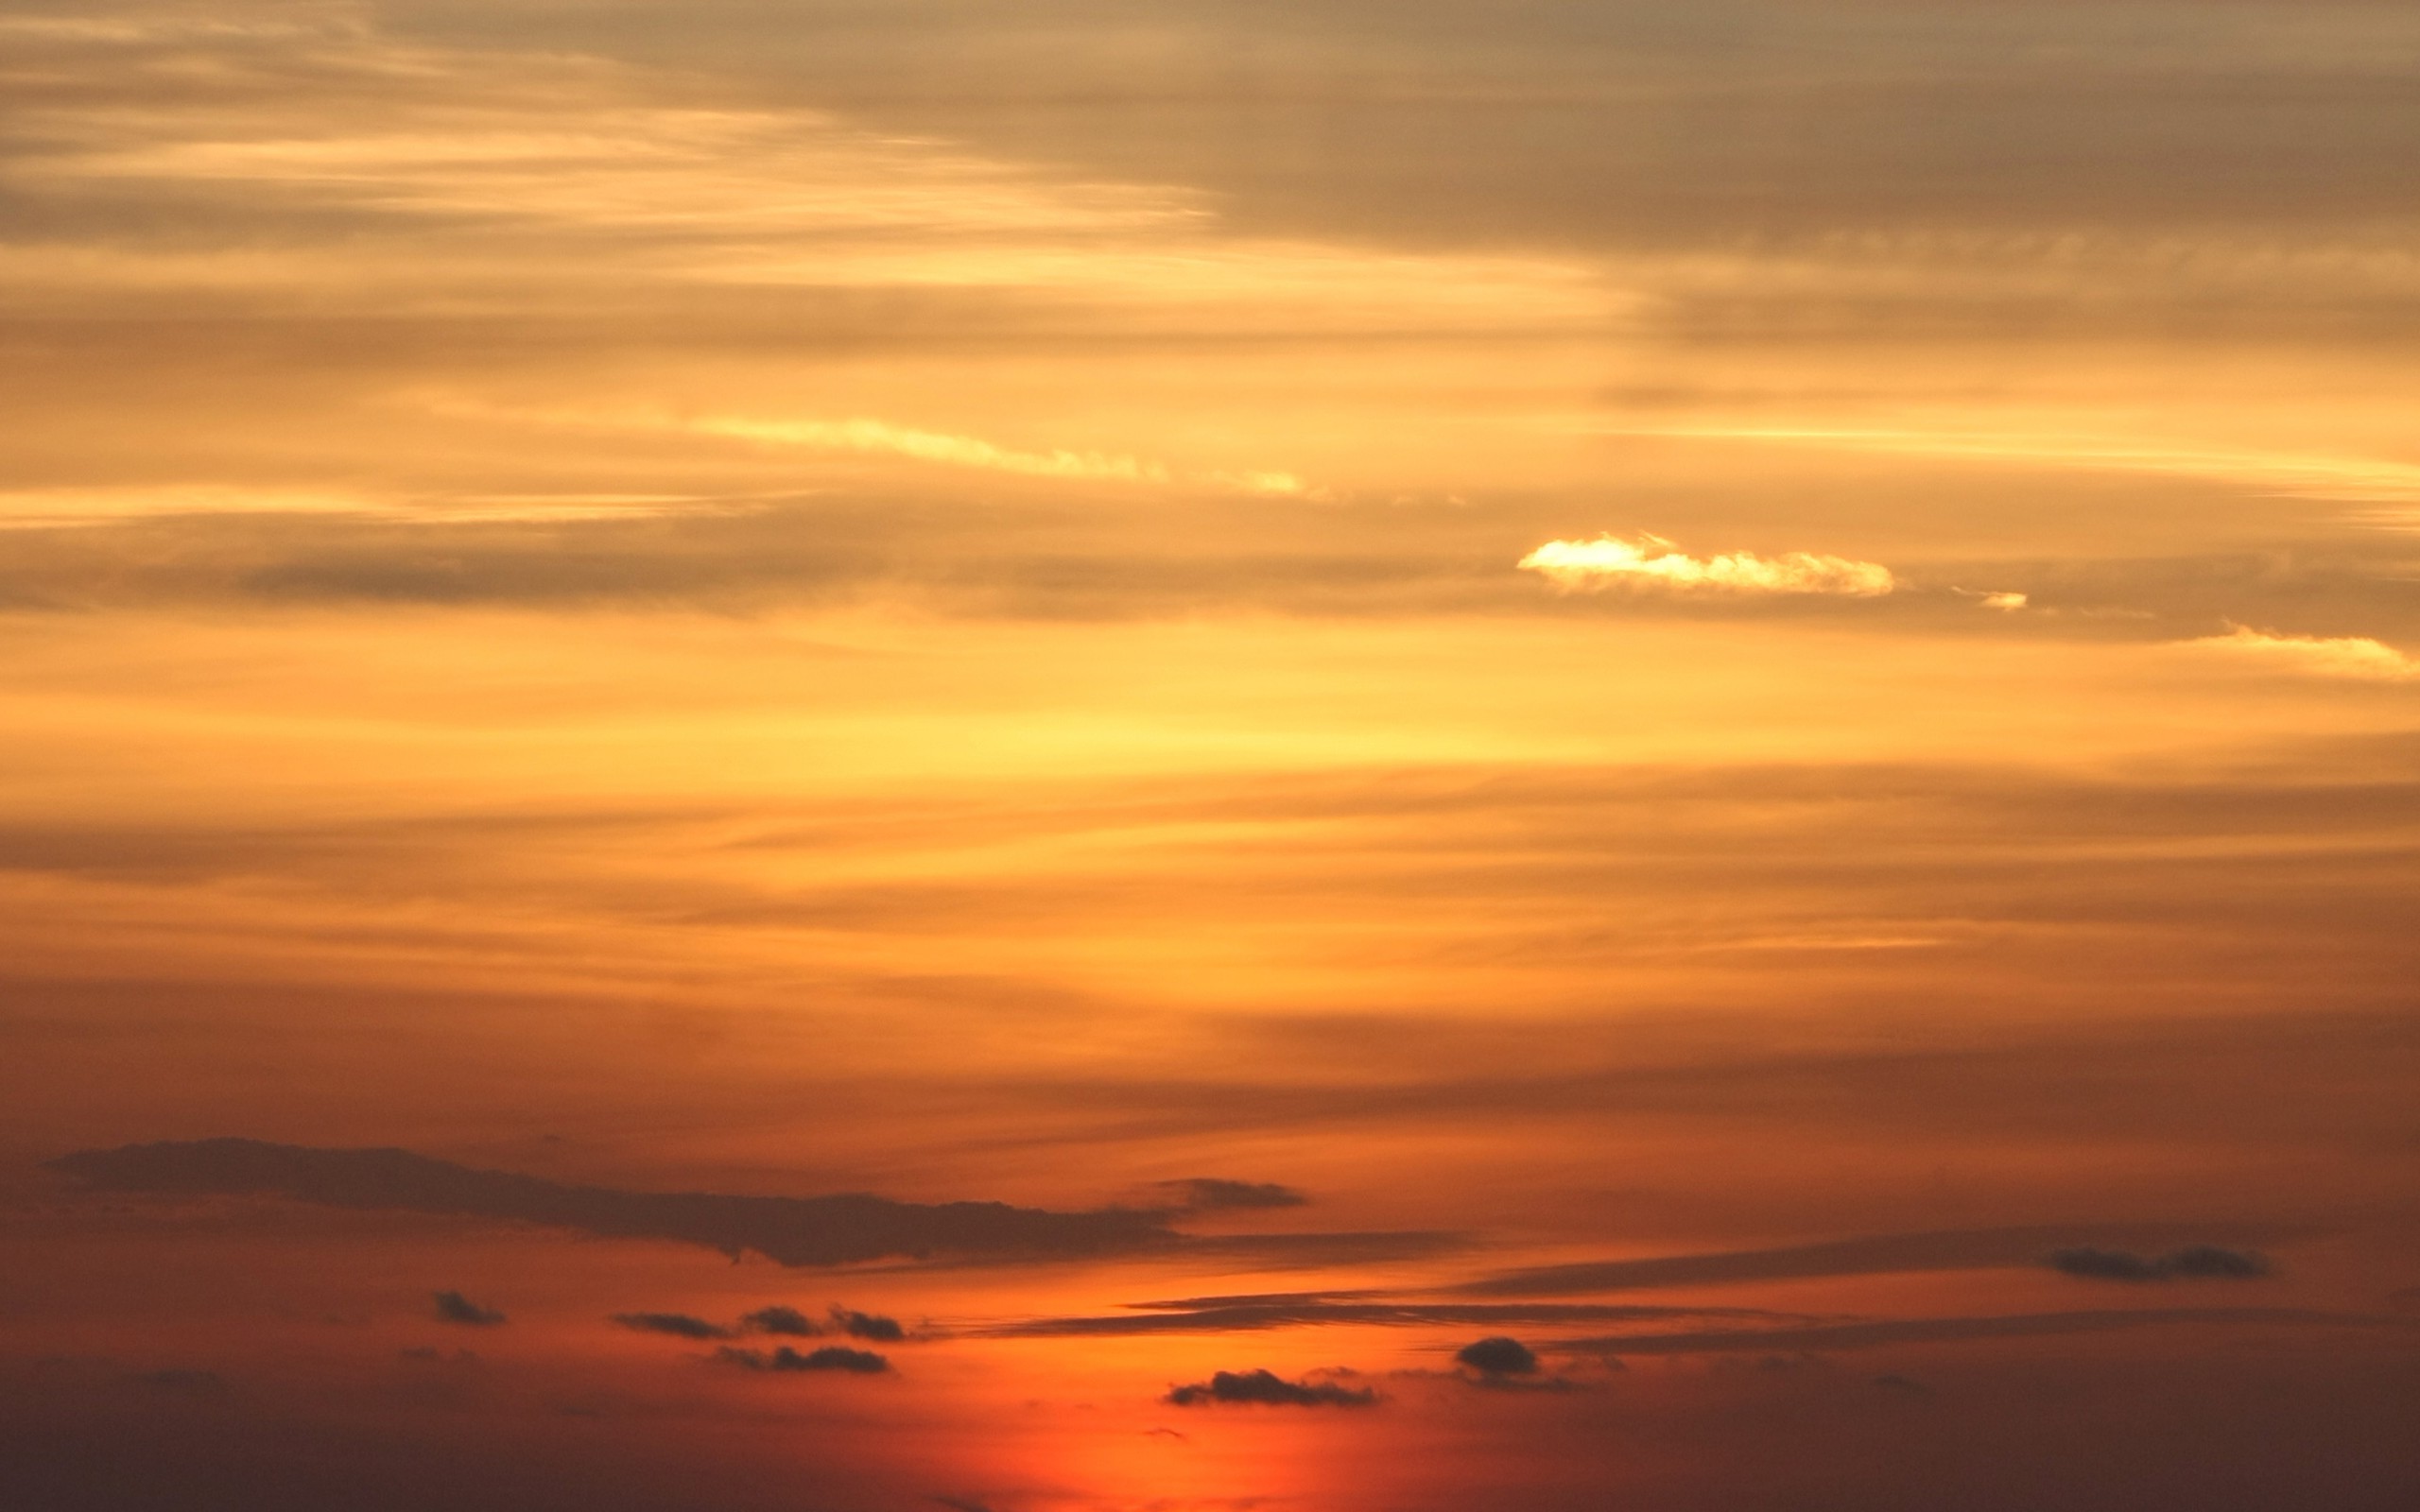 Wallpaper, 2560x1600 px, clouds, nature, orange, sky, sunset 2560x1600